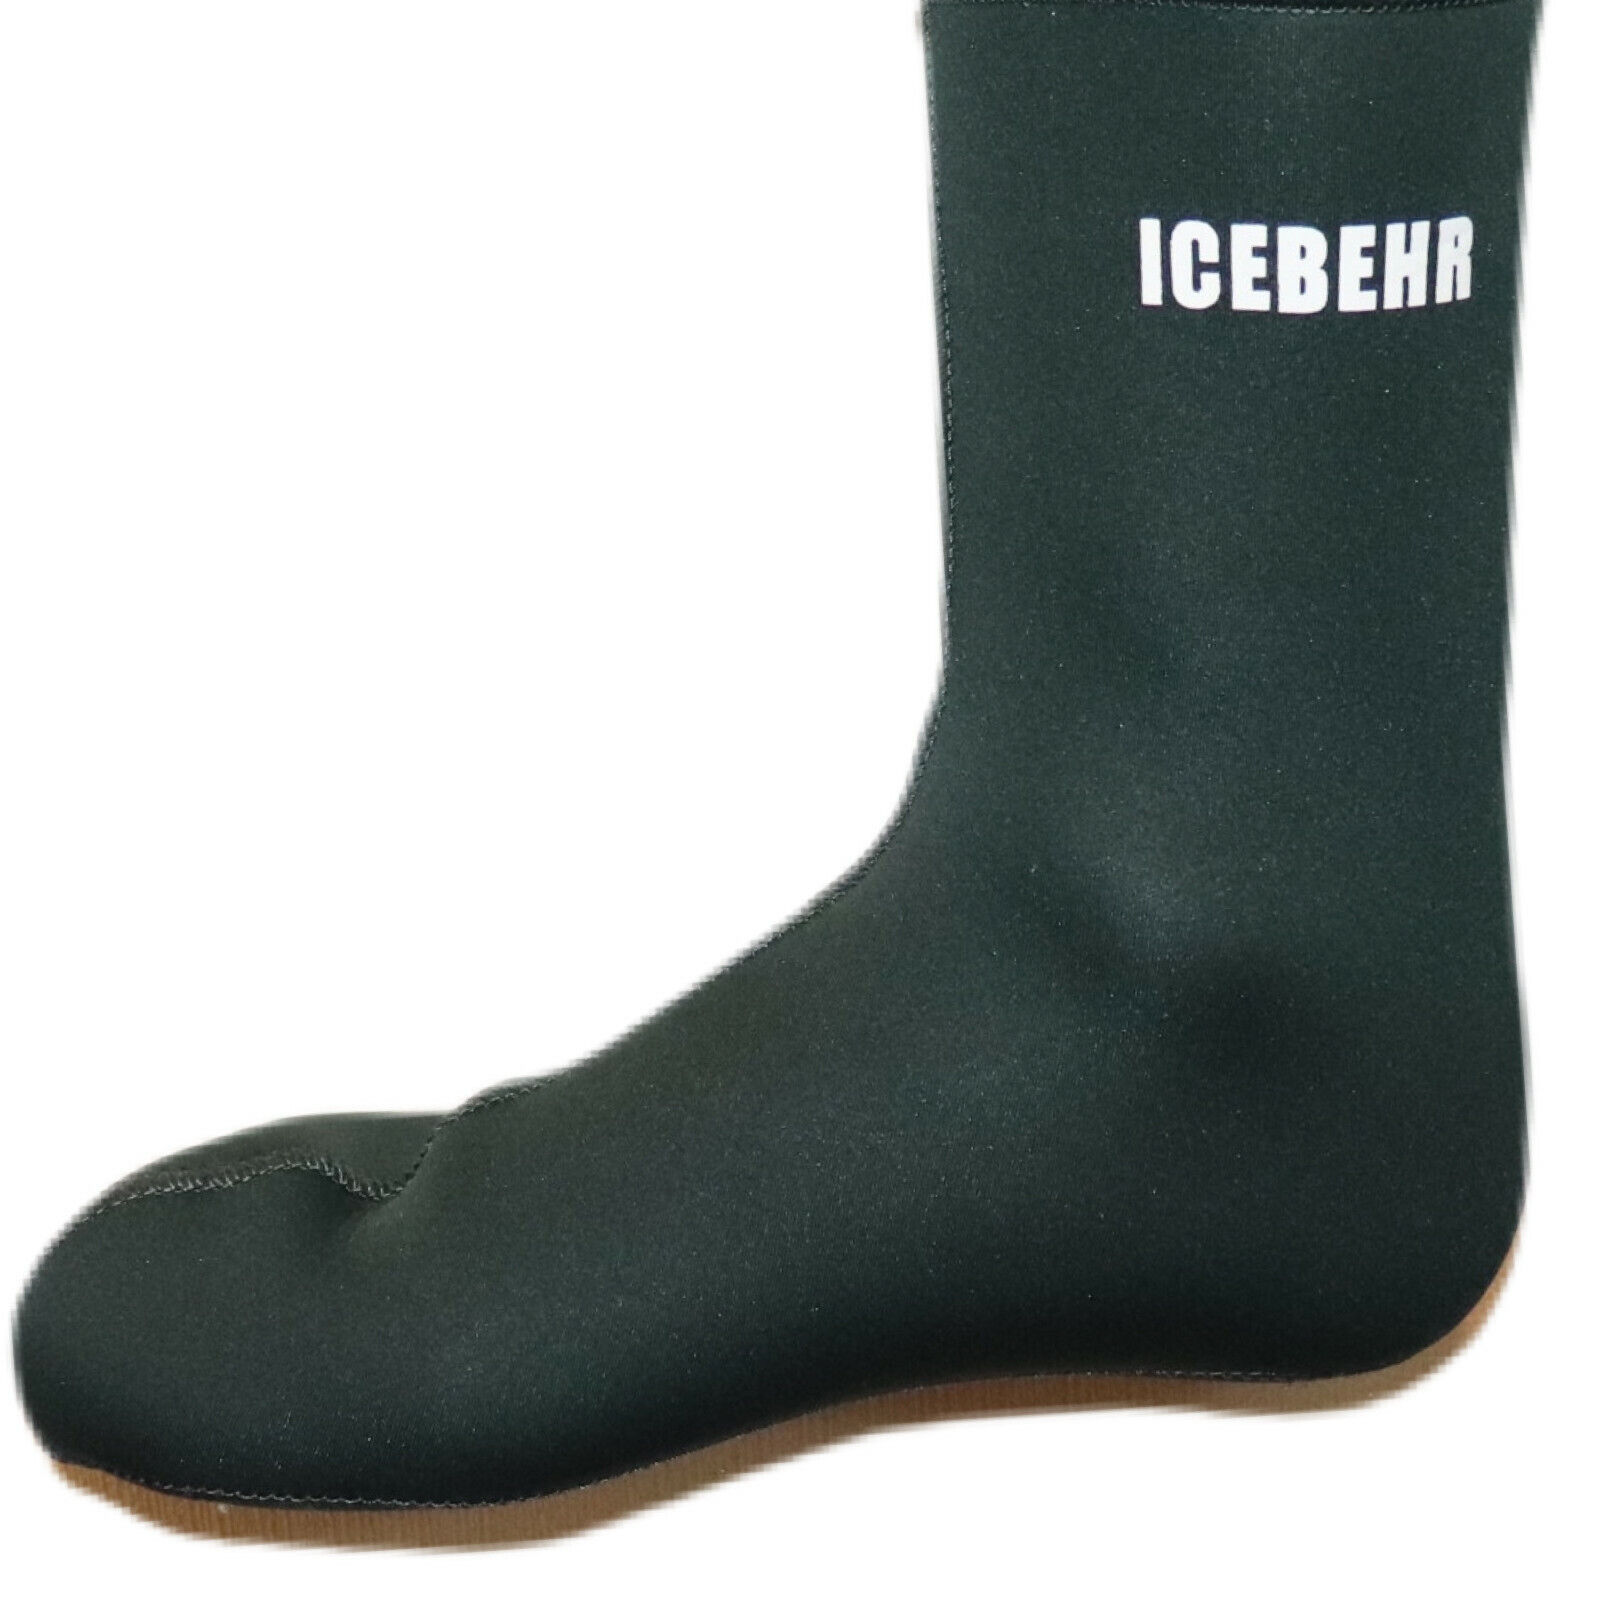 ICE BEHR Titanium Neopren-Socken(lang Gr. XL (45-47))